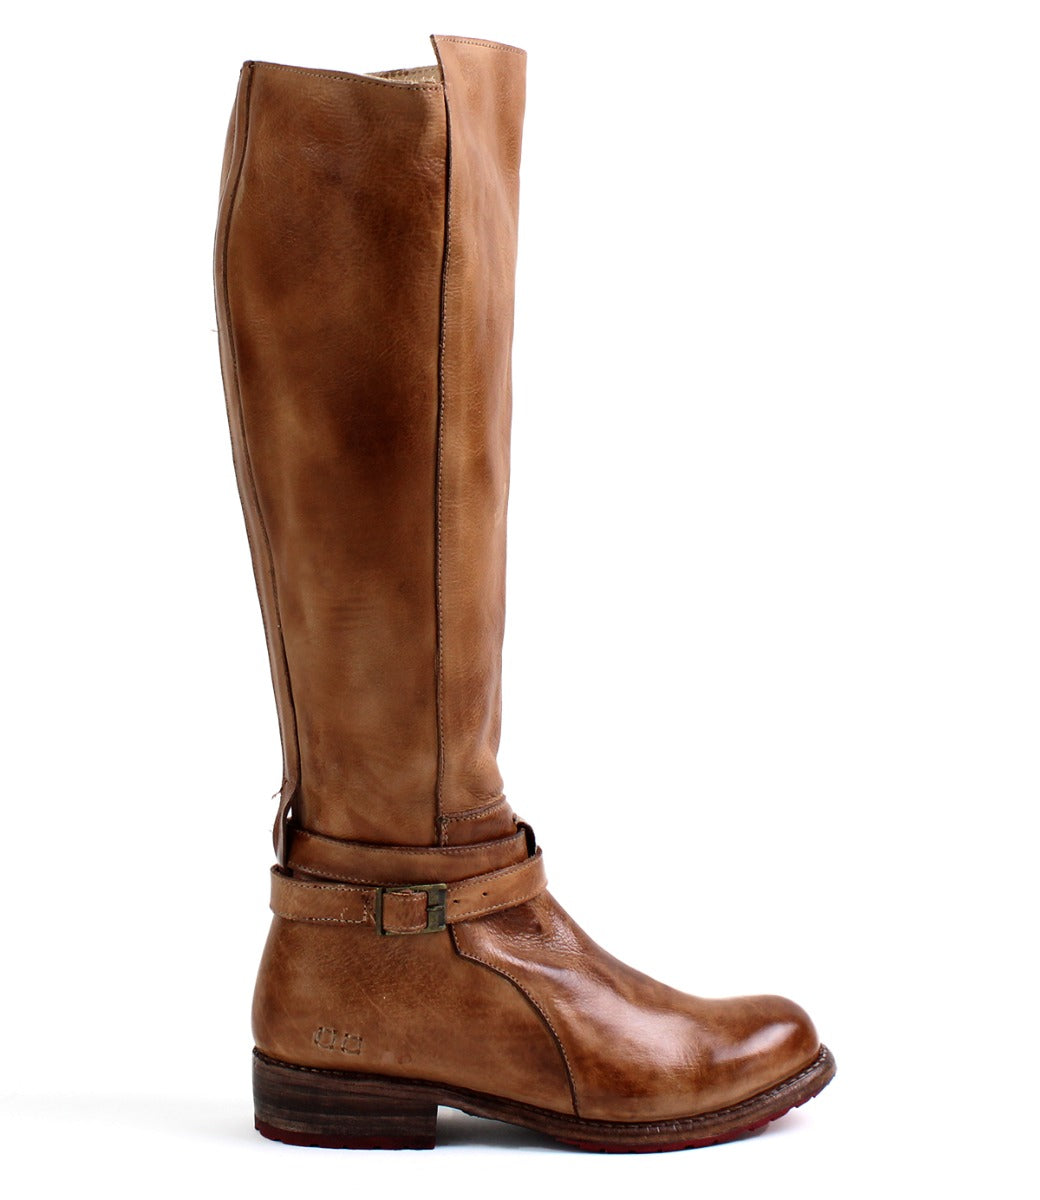 Wide Calf Leather Boots Size 9 Clearance | congdoan.sgu.edu.vn